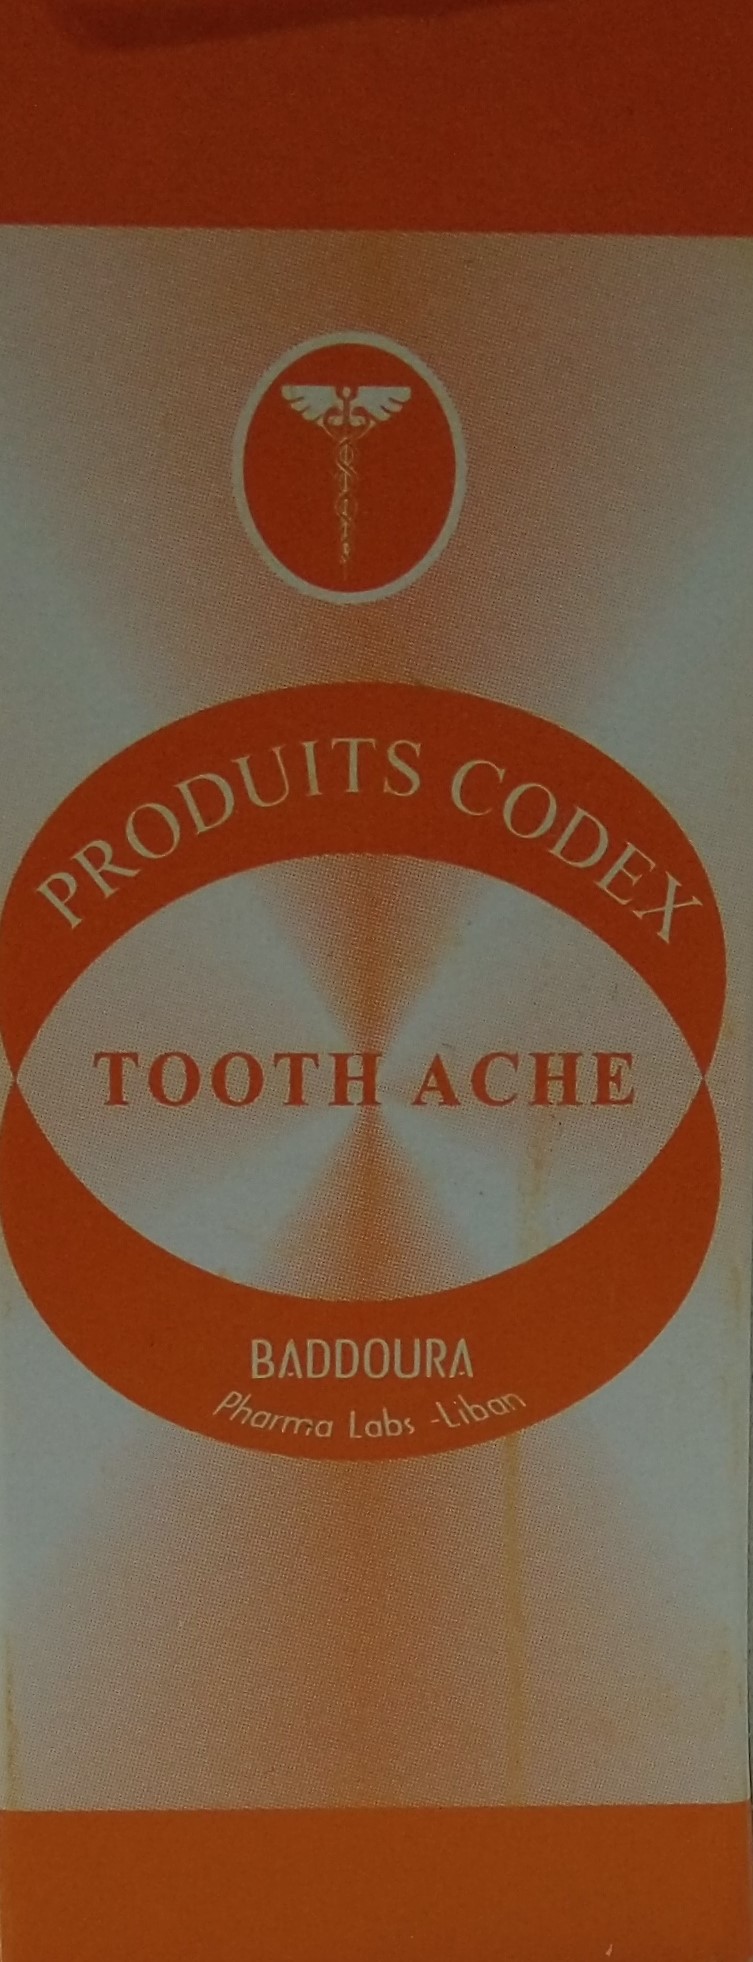 Tooth Ache Baddoura